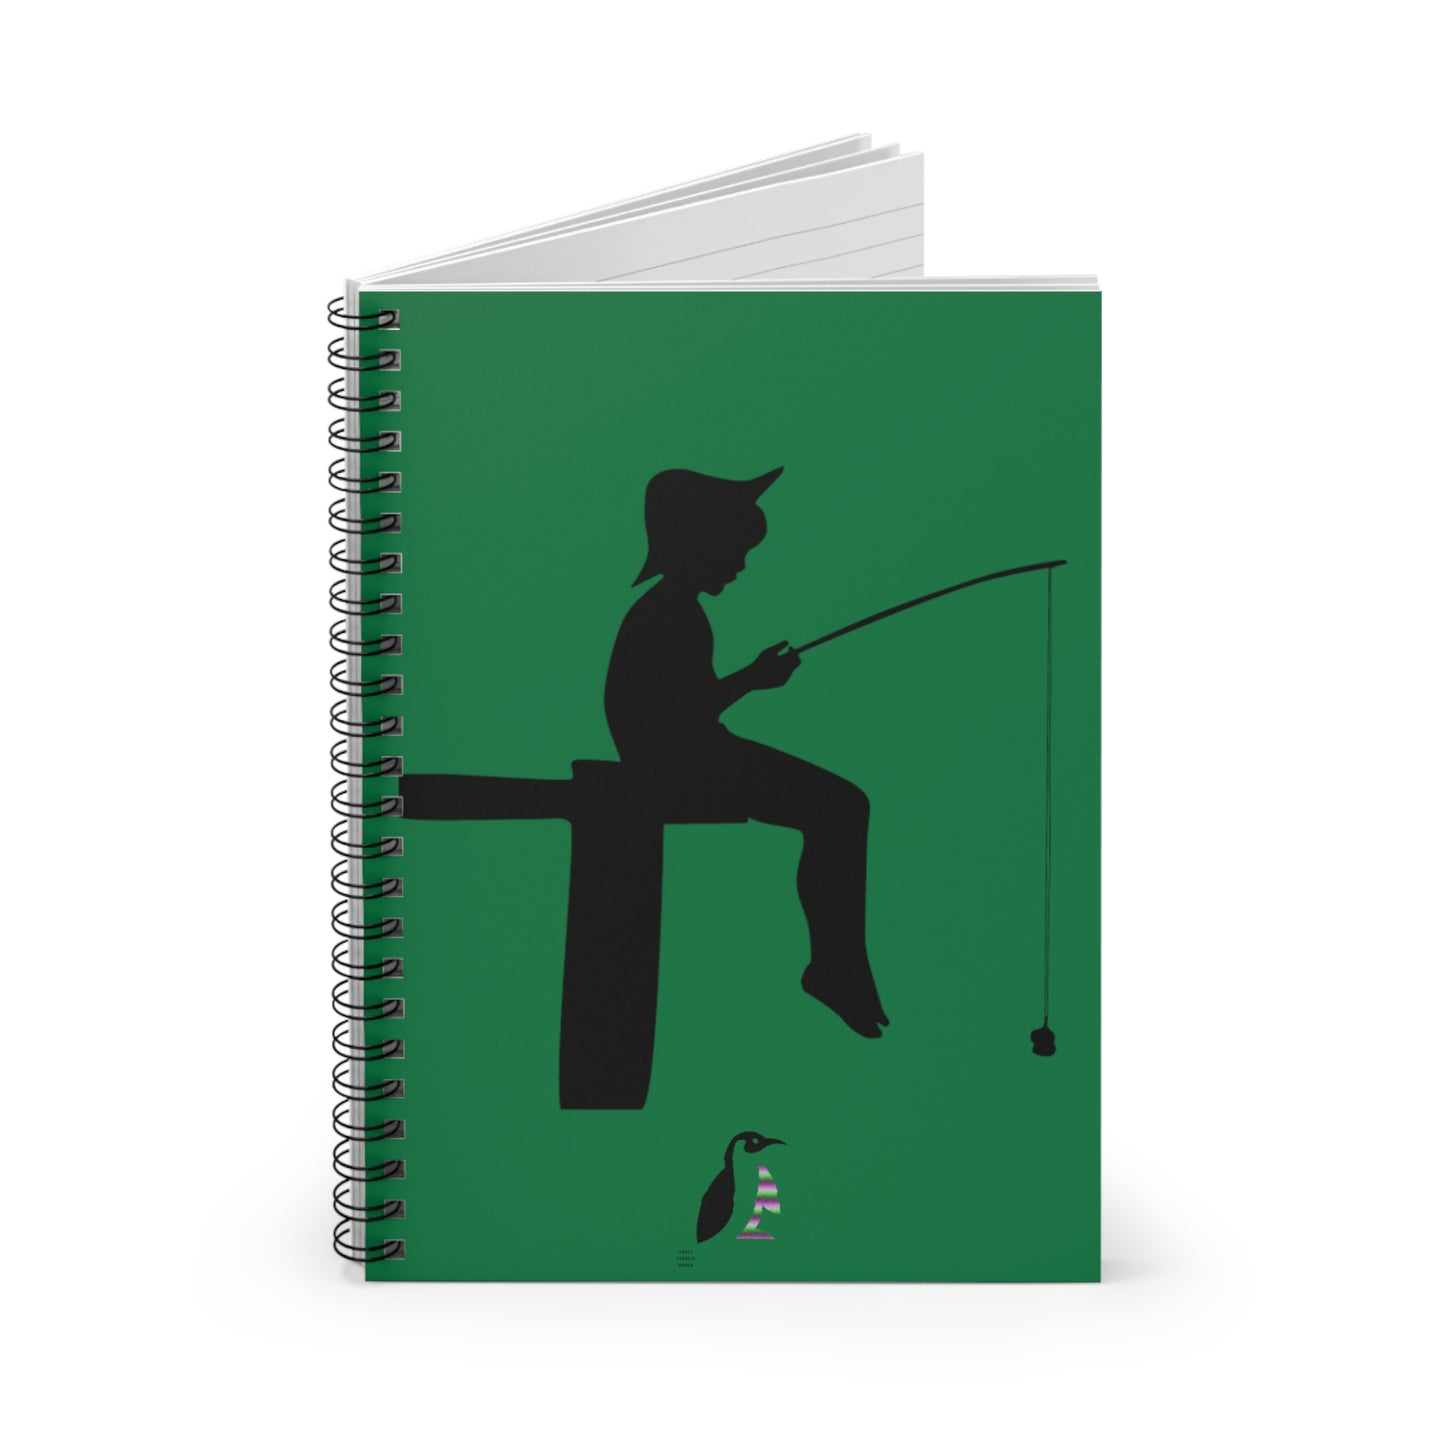 Spiral Notebook - Ruled Line: Fishing Dark Green